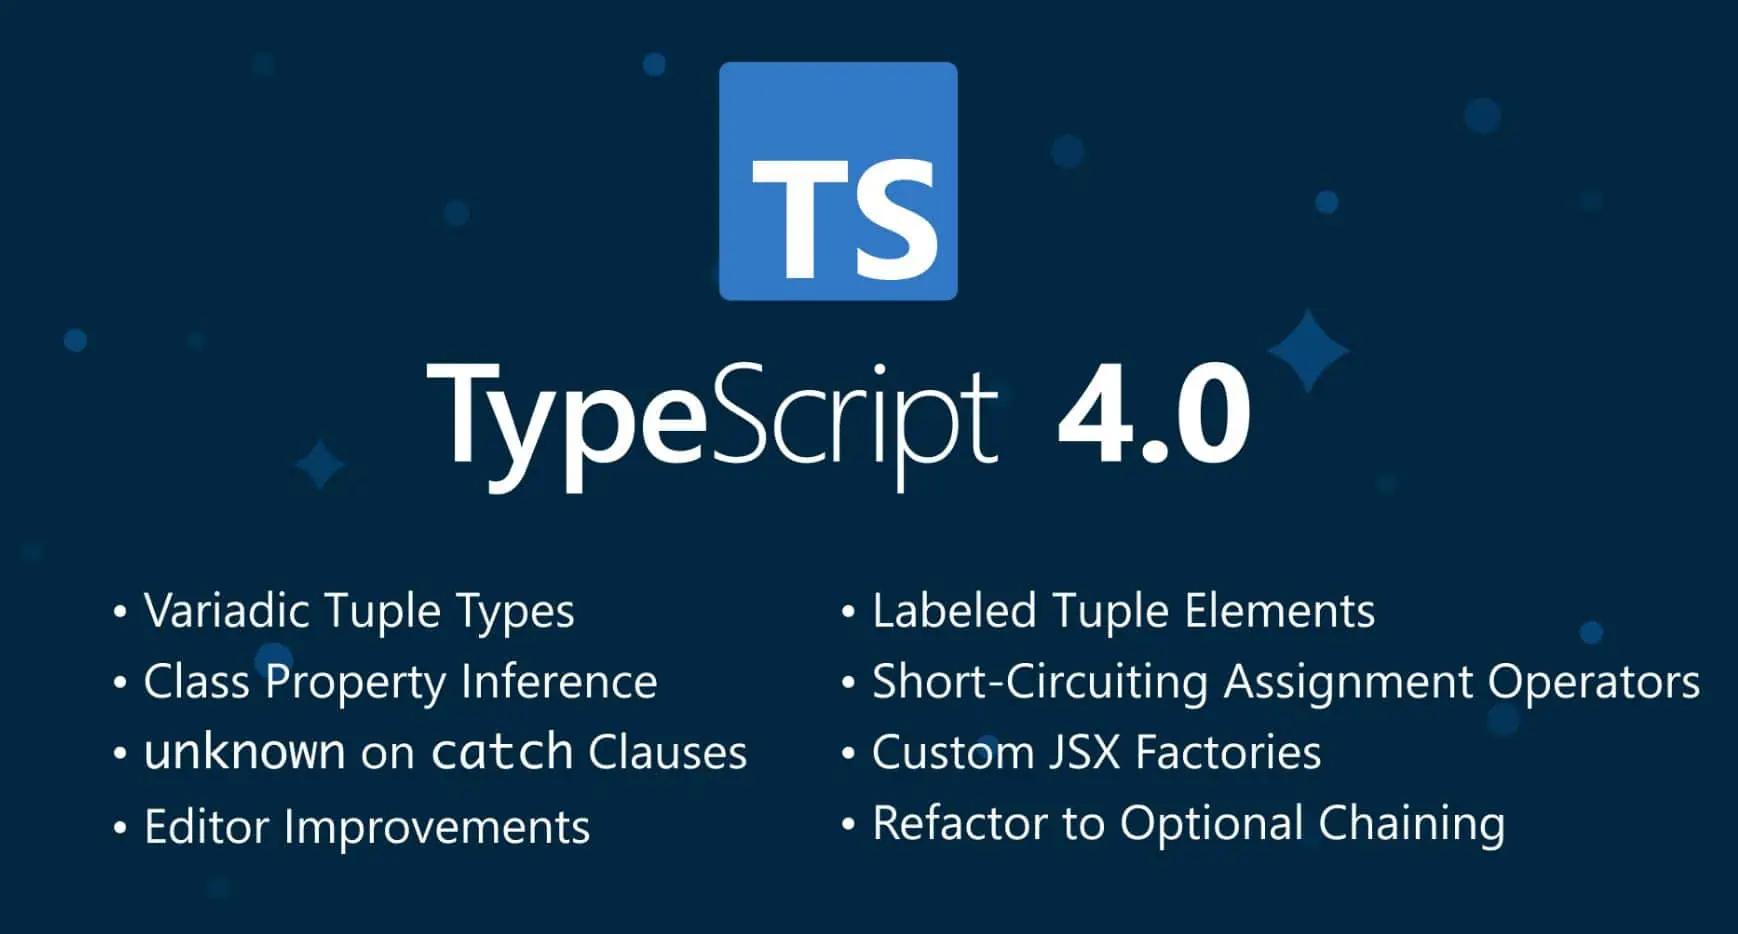 Microsoft TypeScript